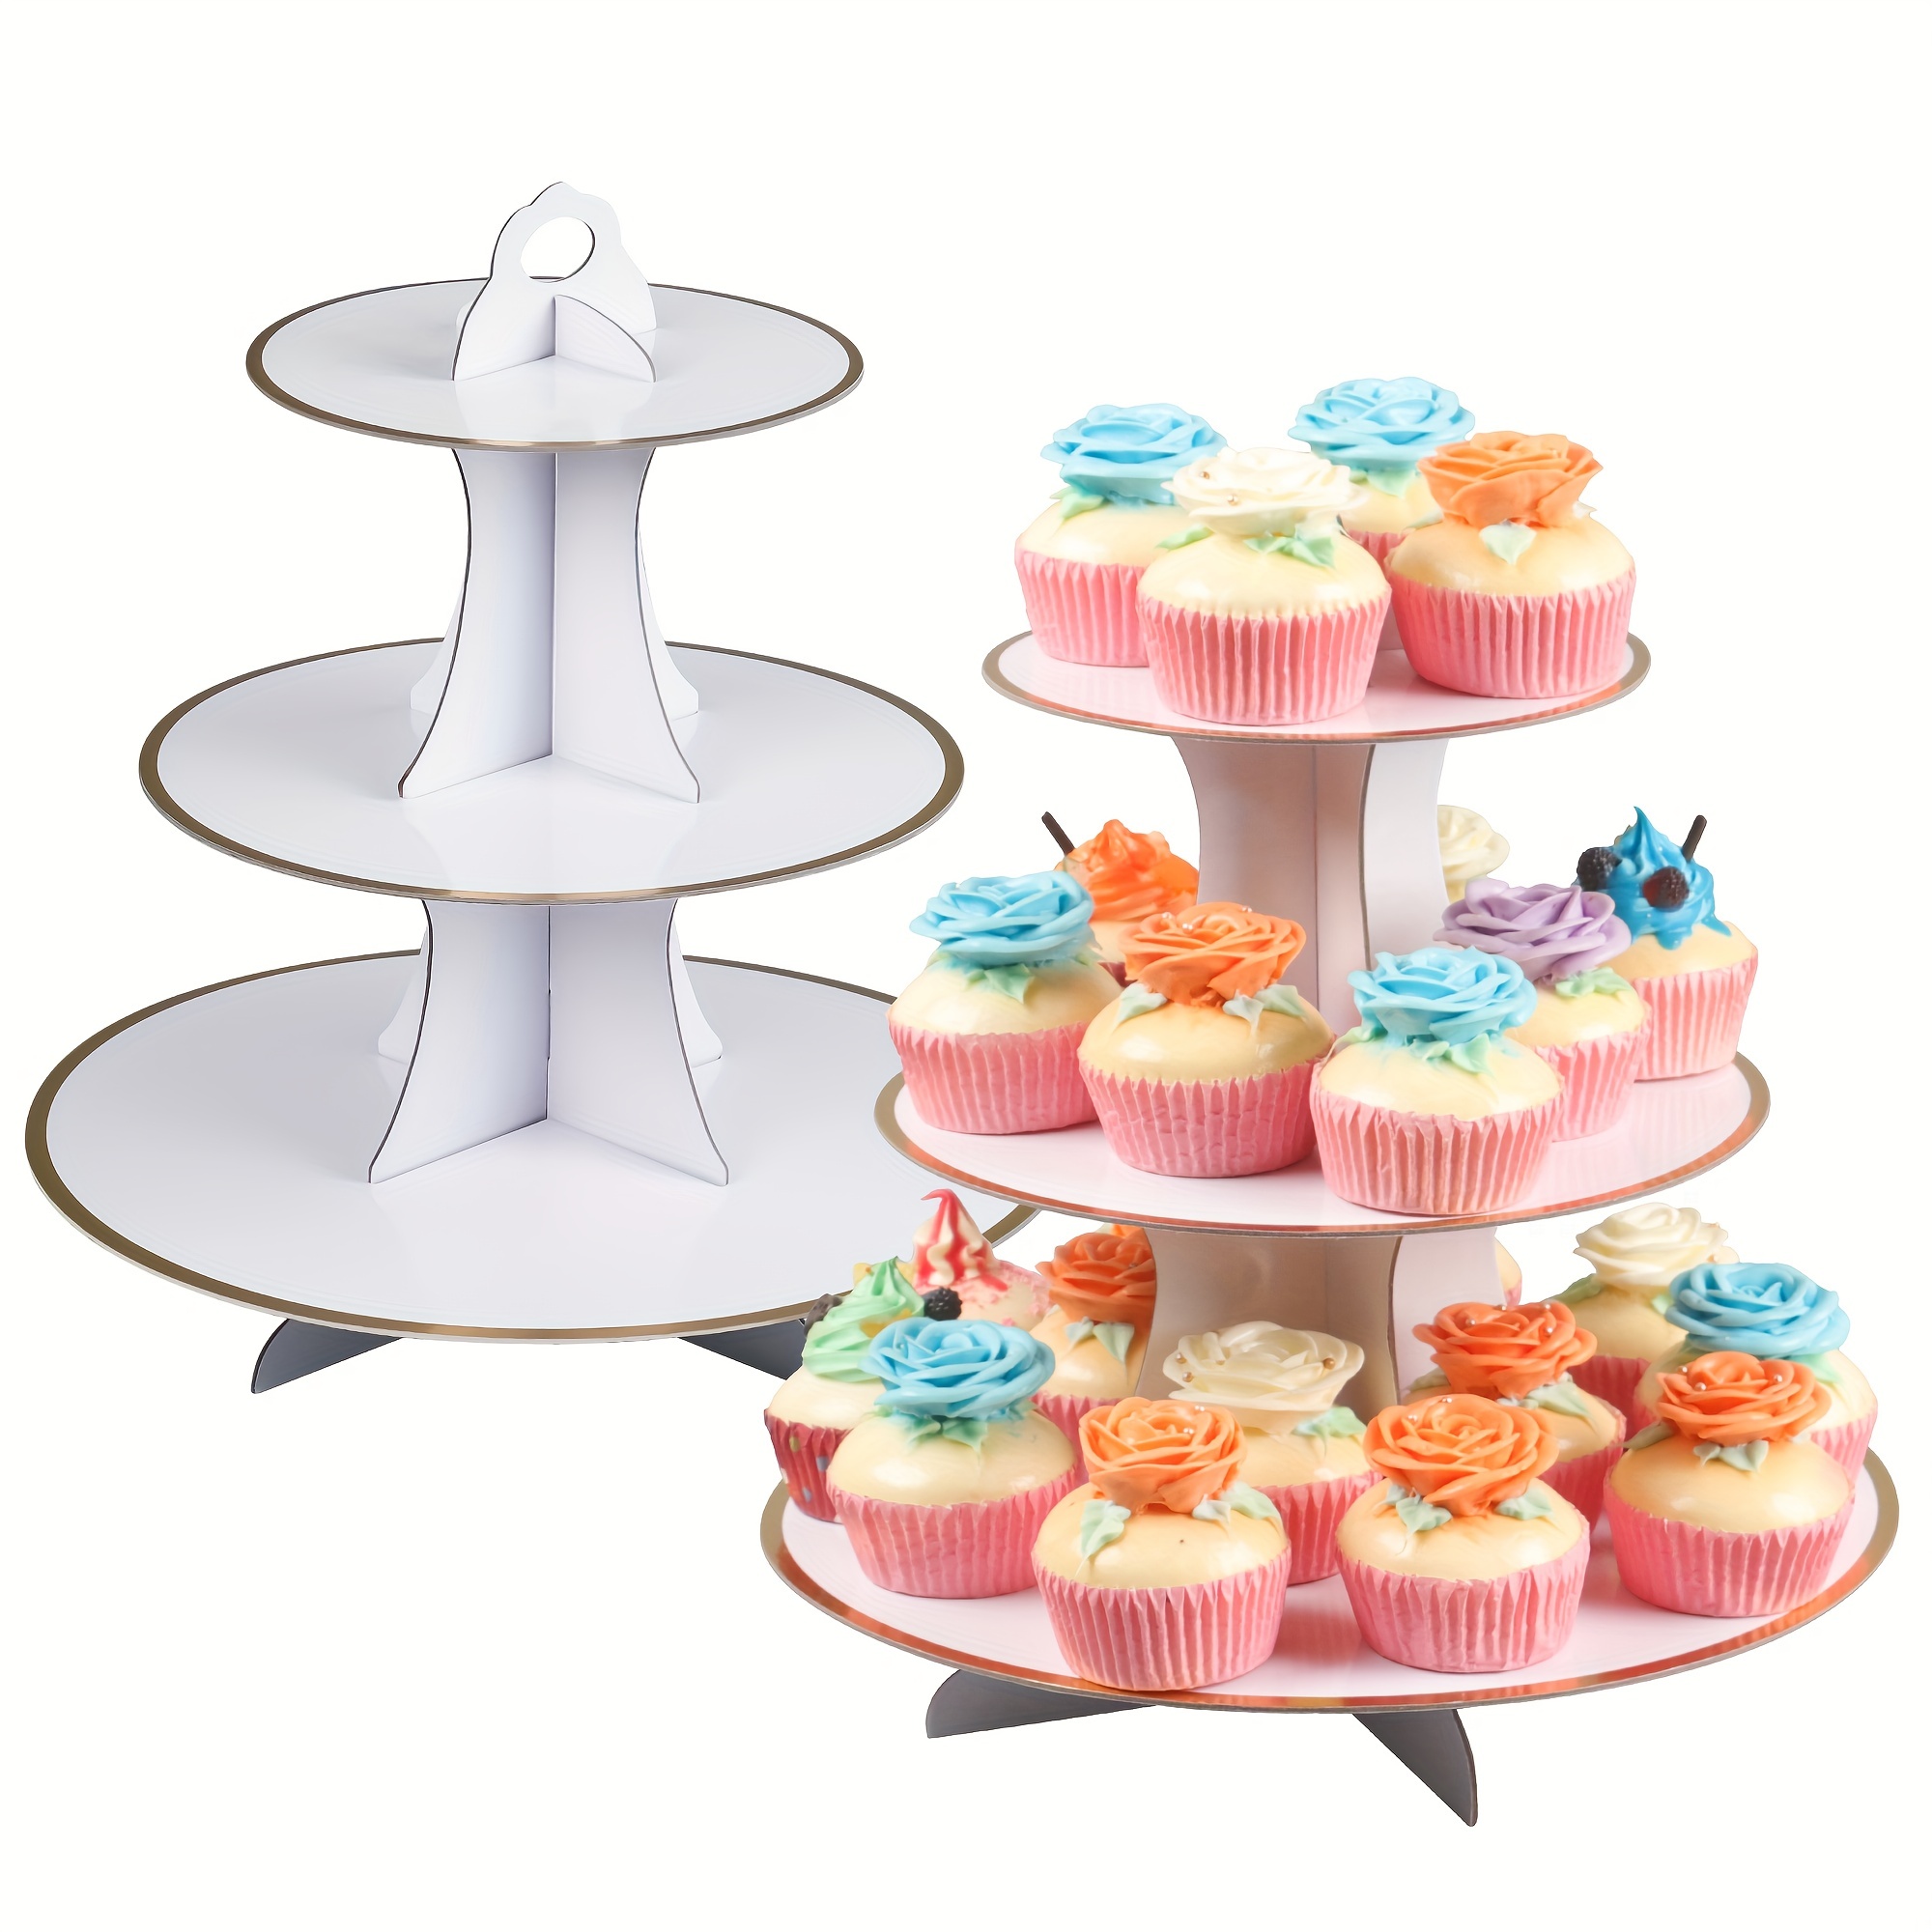 3 Tier Cupcake Stand DIY Cardboard Dessert Holder Kit Table Cake